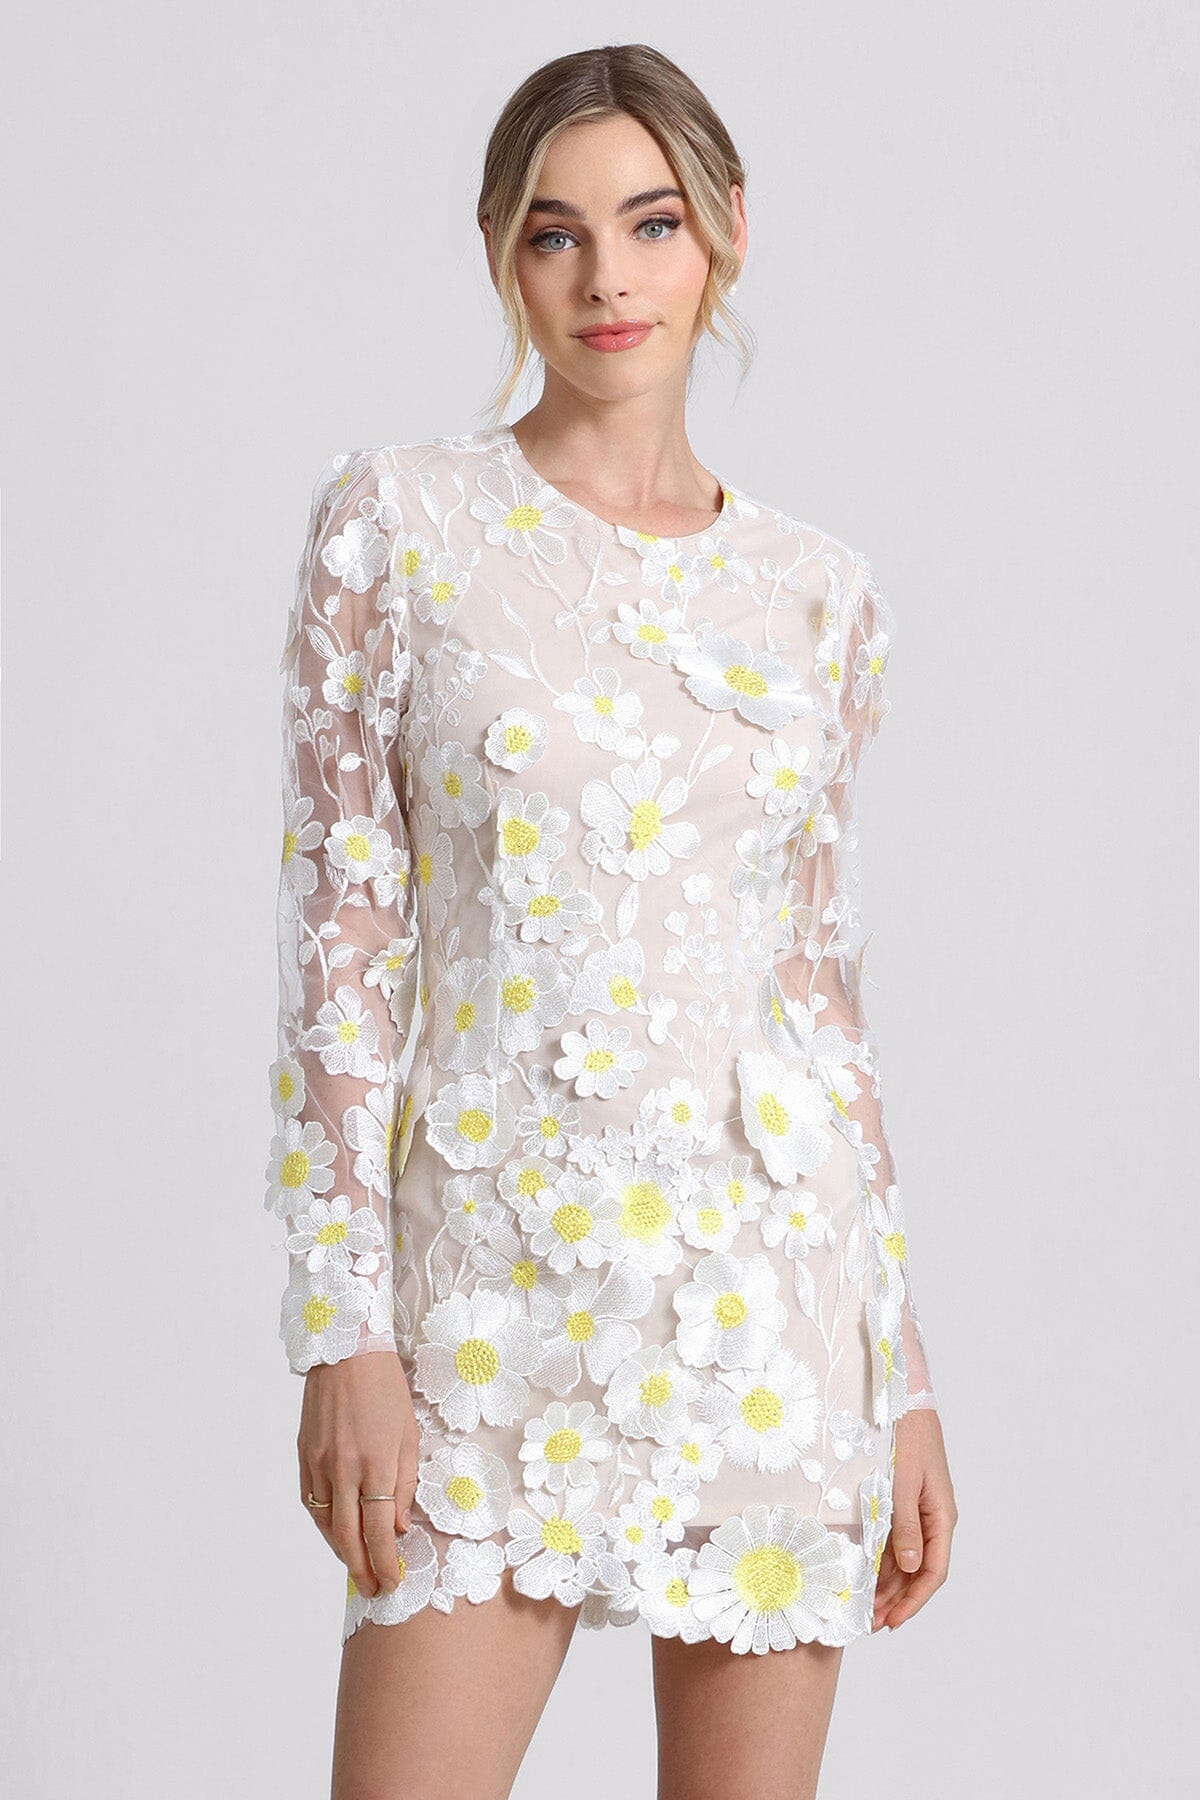 White long sleeve embroidered mini dress daisy flower applique - women's figure flattering bachelorette party dresses by Avec Les Filles